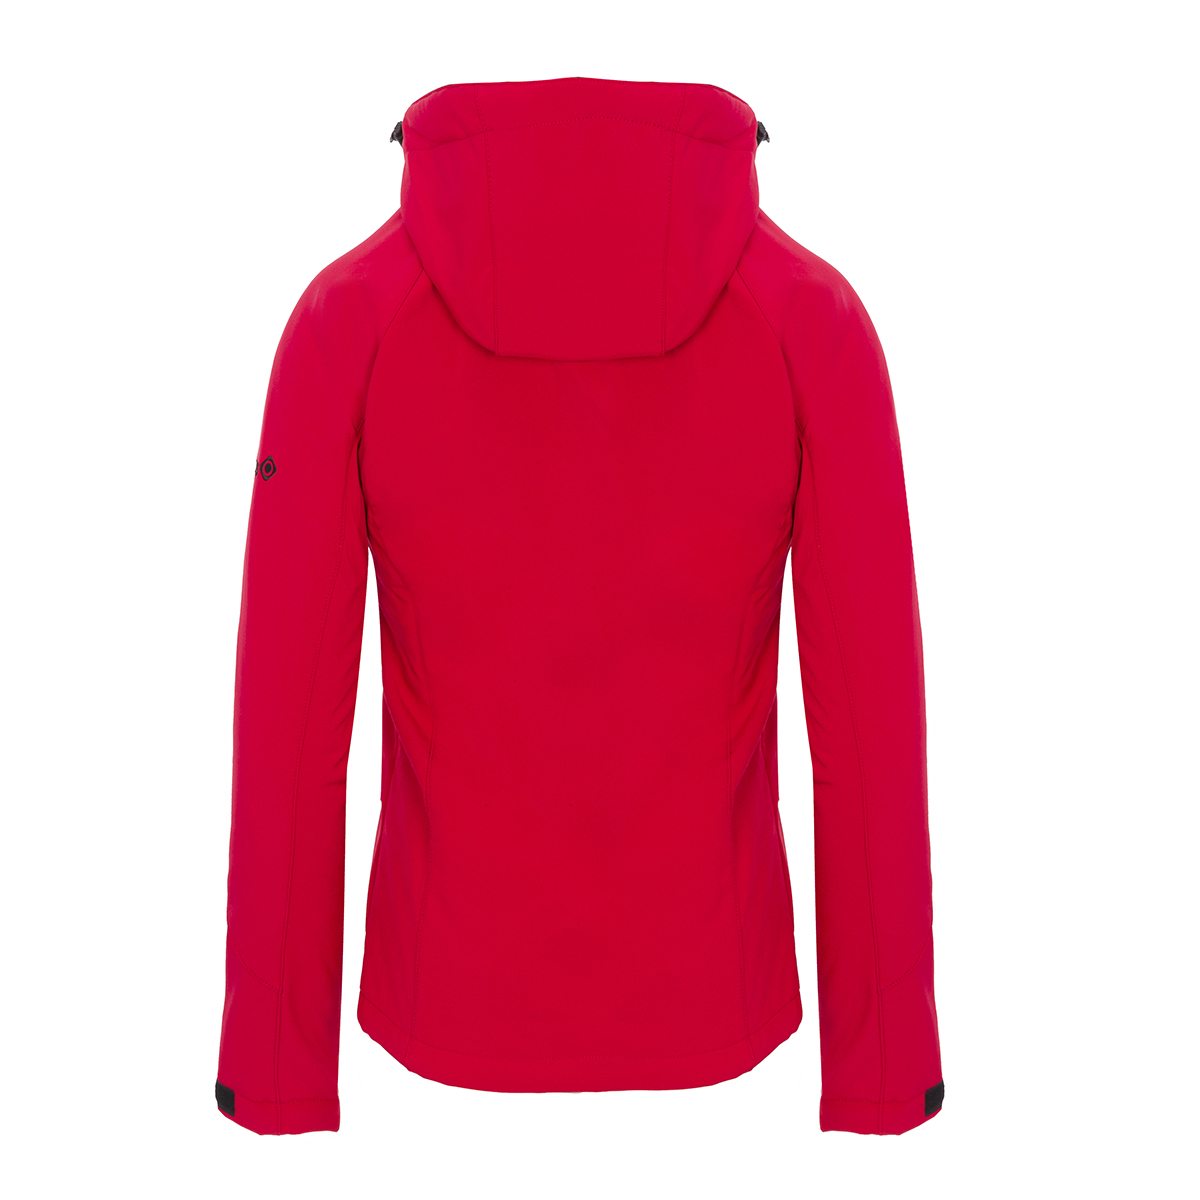 Izas Oshawa Women's Hooded Softshell Jacket (Medium, Red/Red) - image 2 of 4